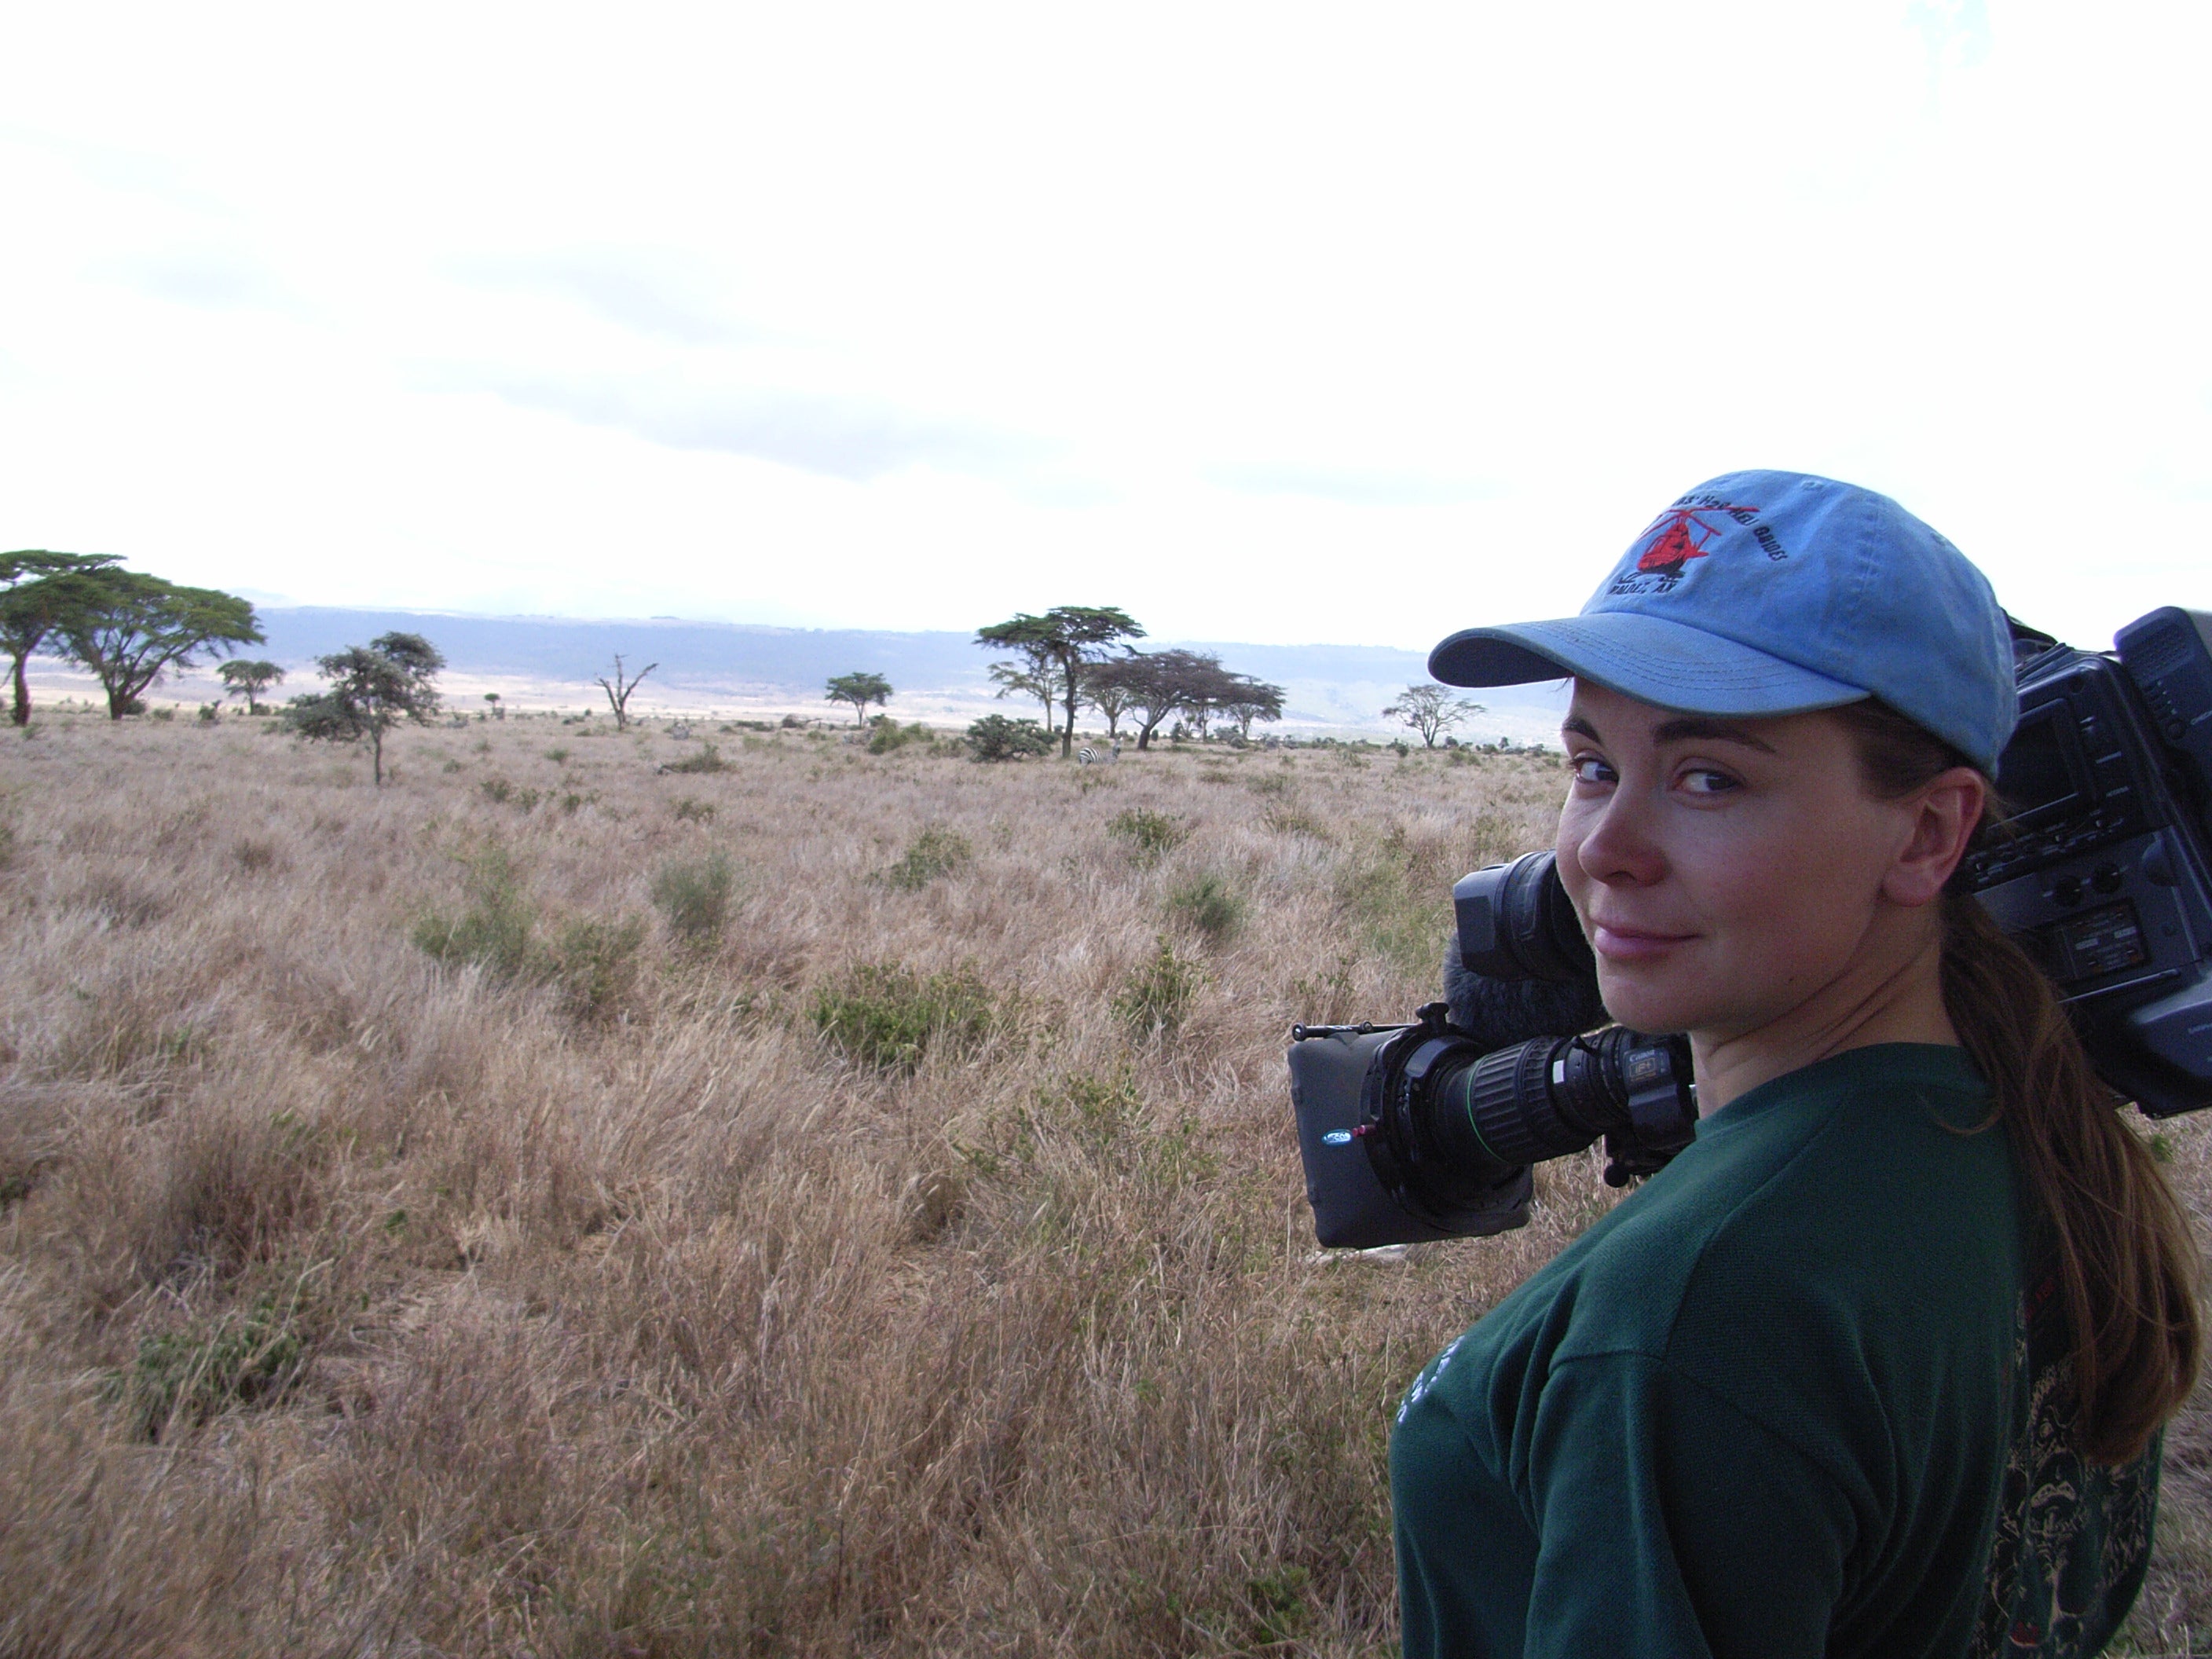 Belinda Kirk filming for the BBC in Kenya (Handout/PA)